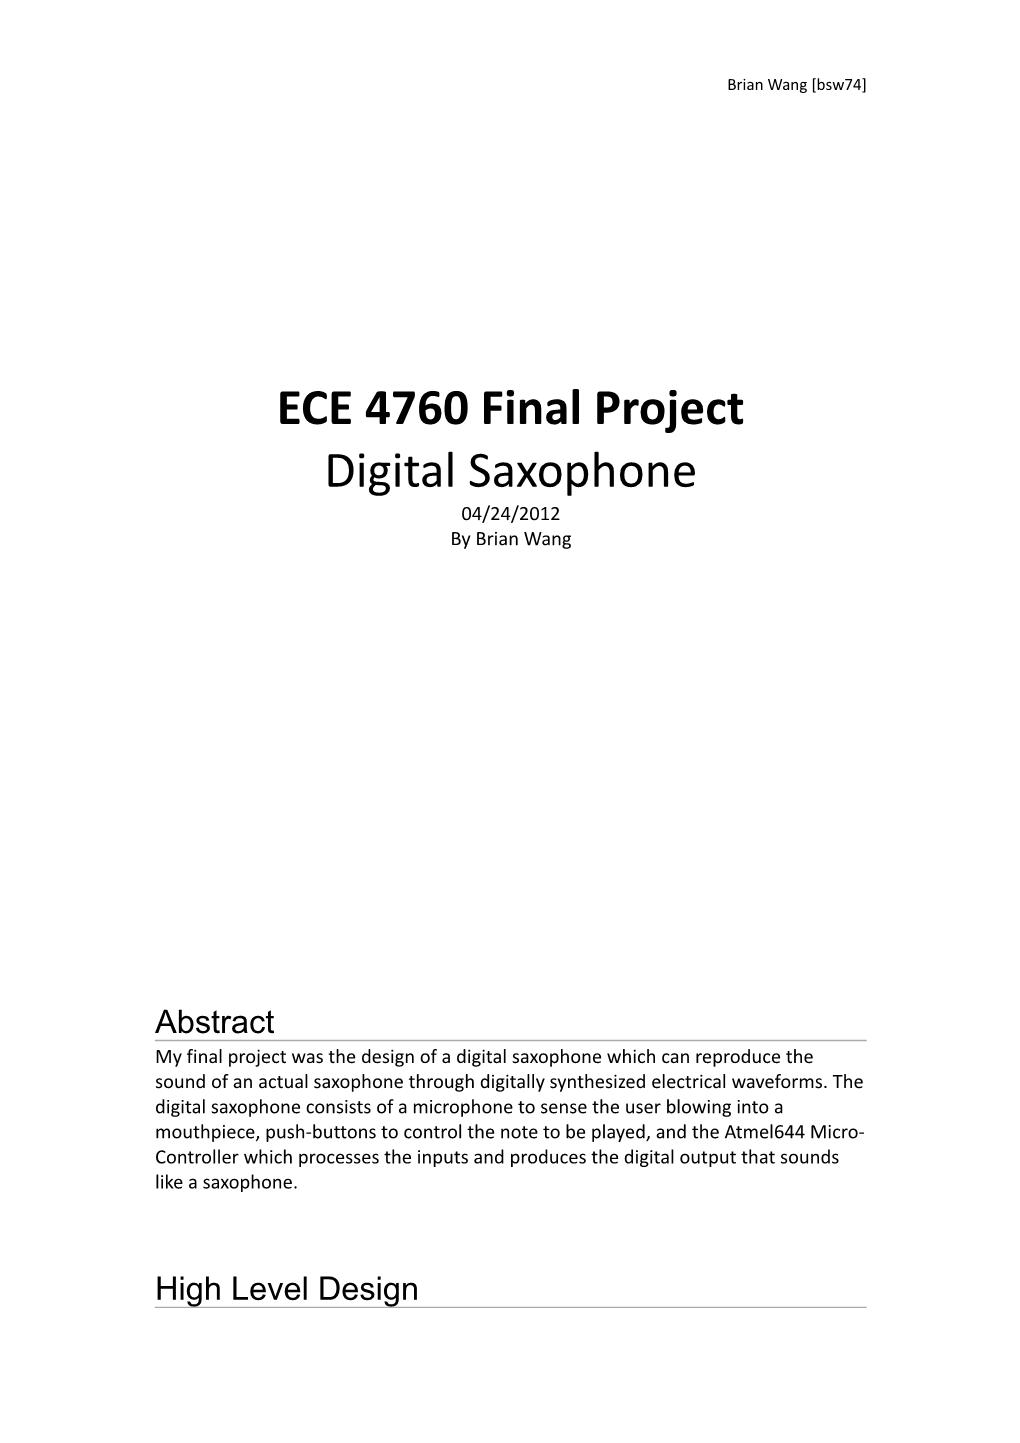 ECE 4760 Final Project